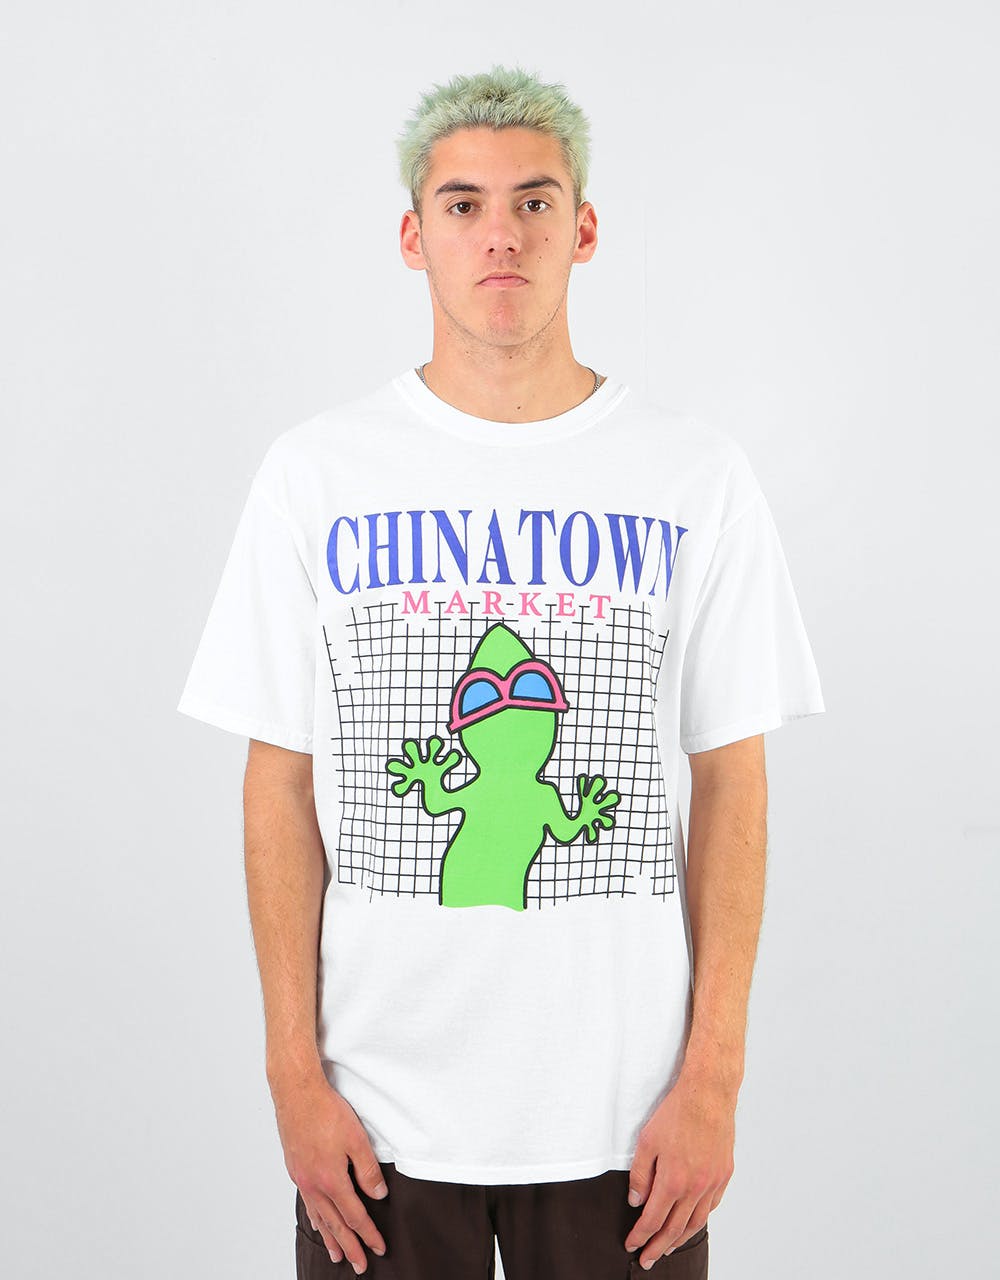 Chinatown Market Gecko T-Shirt - White